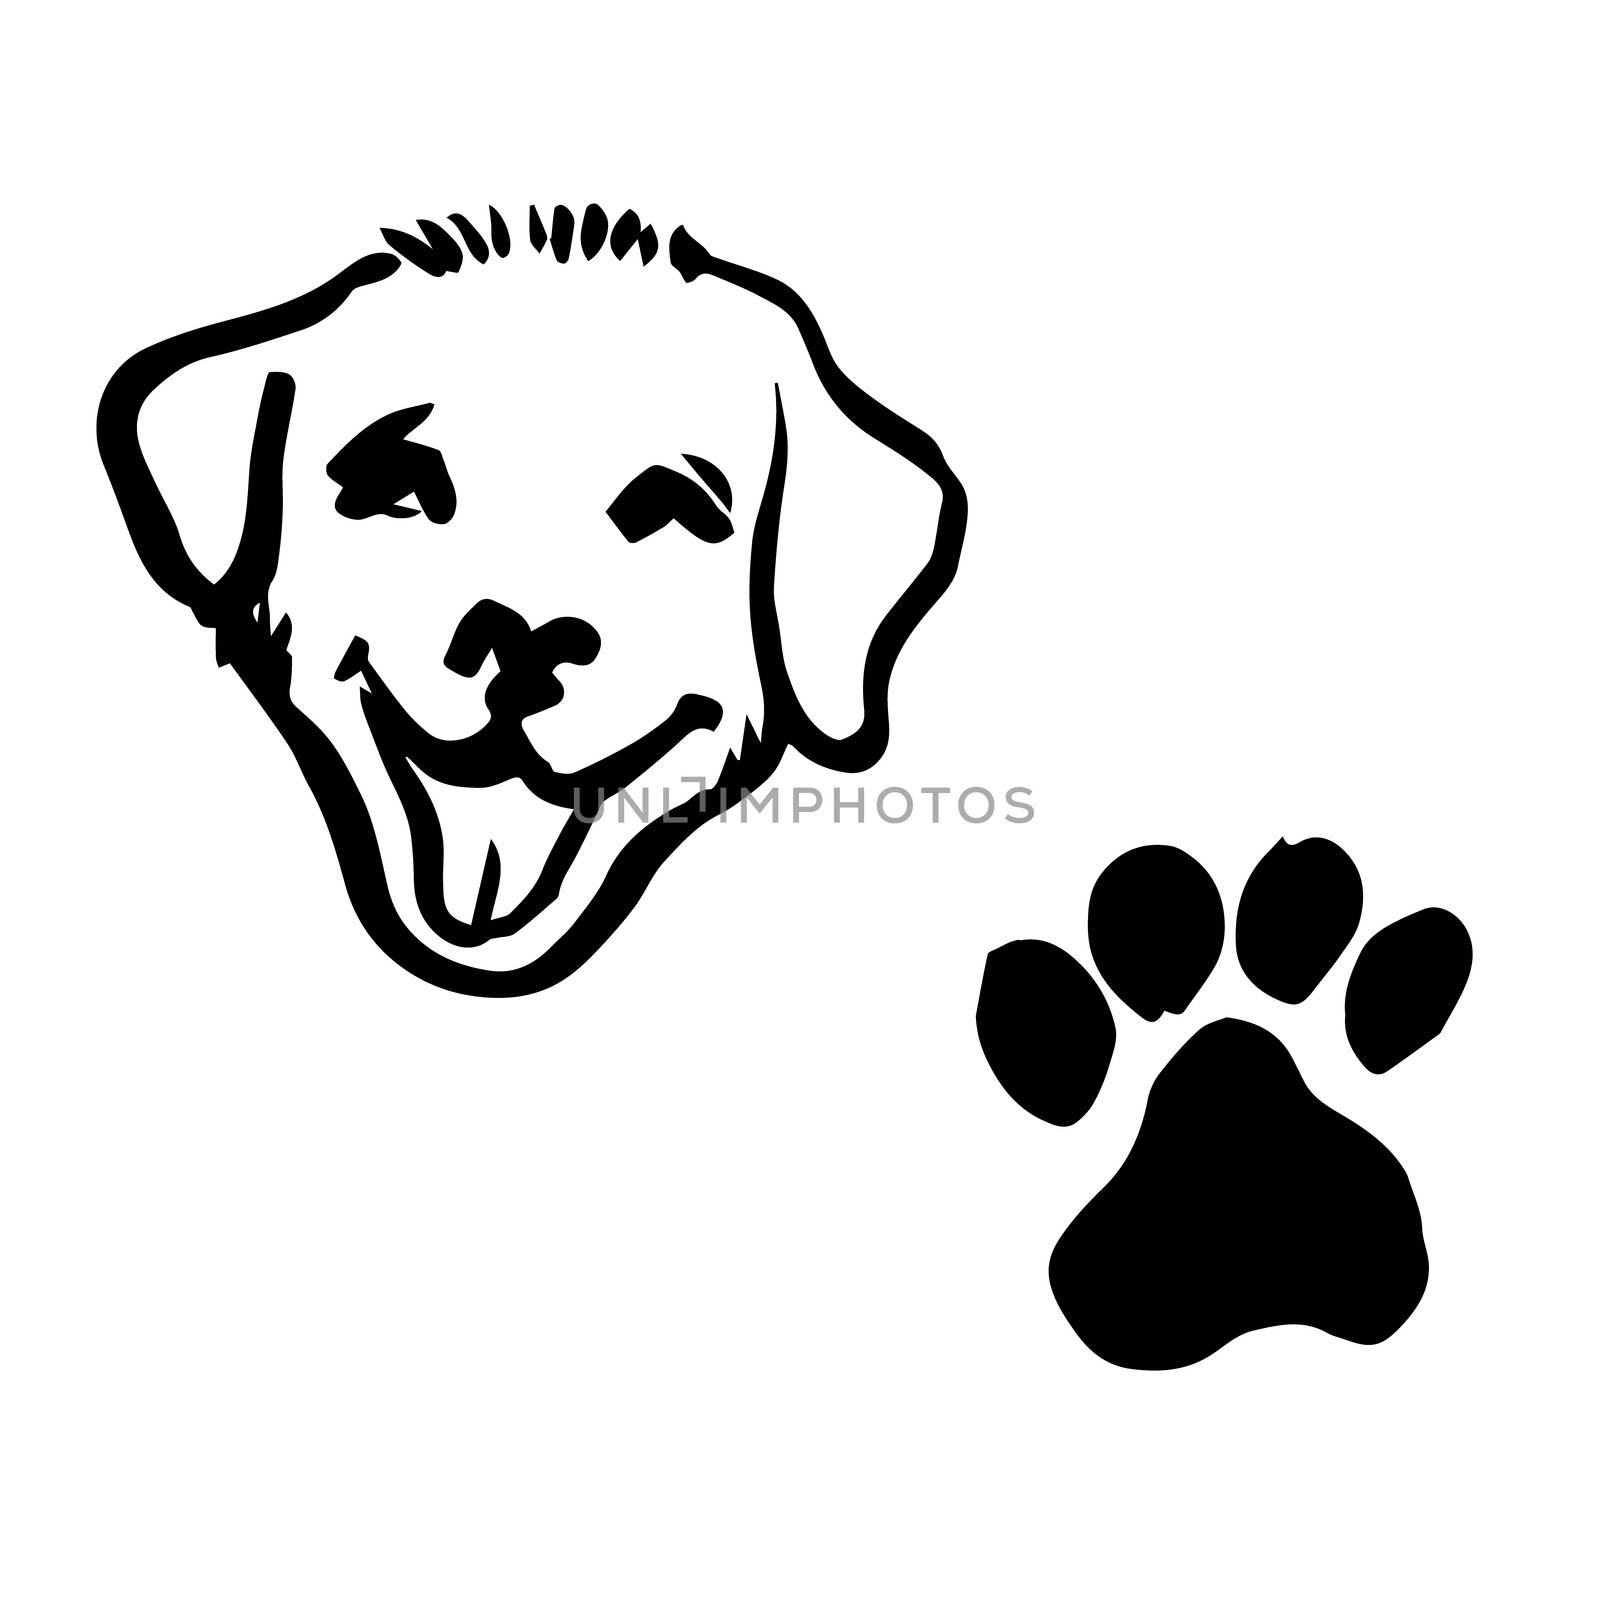 freehand sketch illustration of Labrador Retriever puppy dog, animal footprint doodle hand drawn